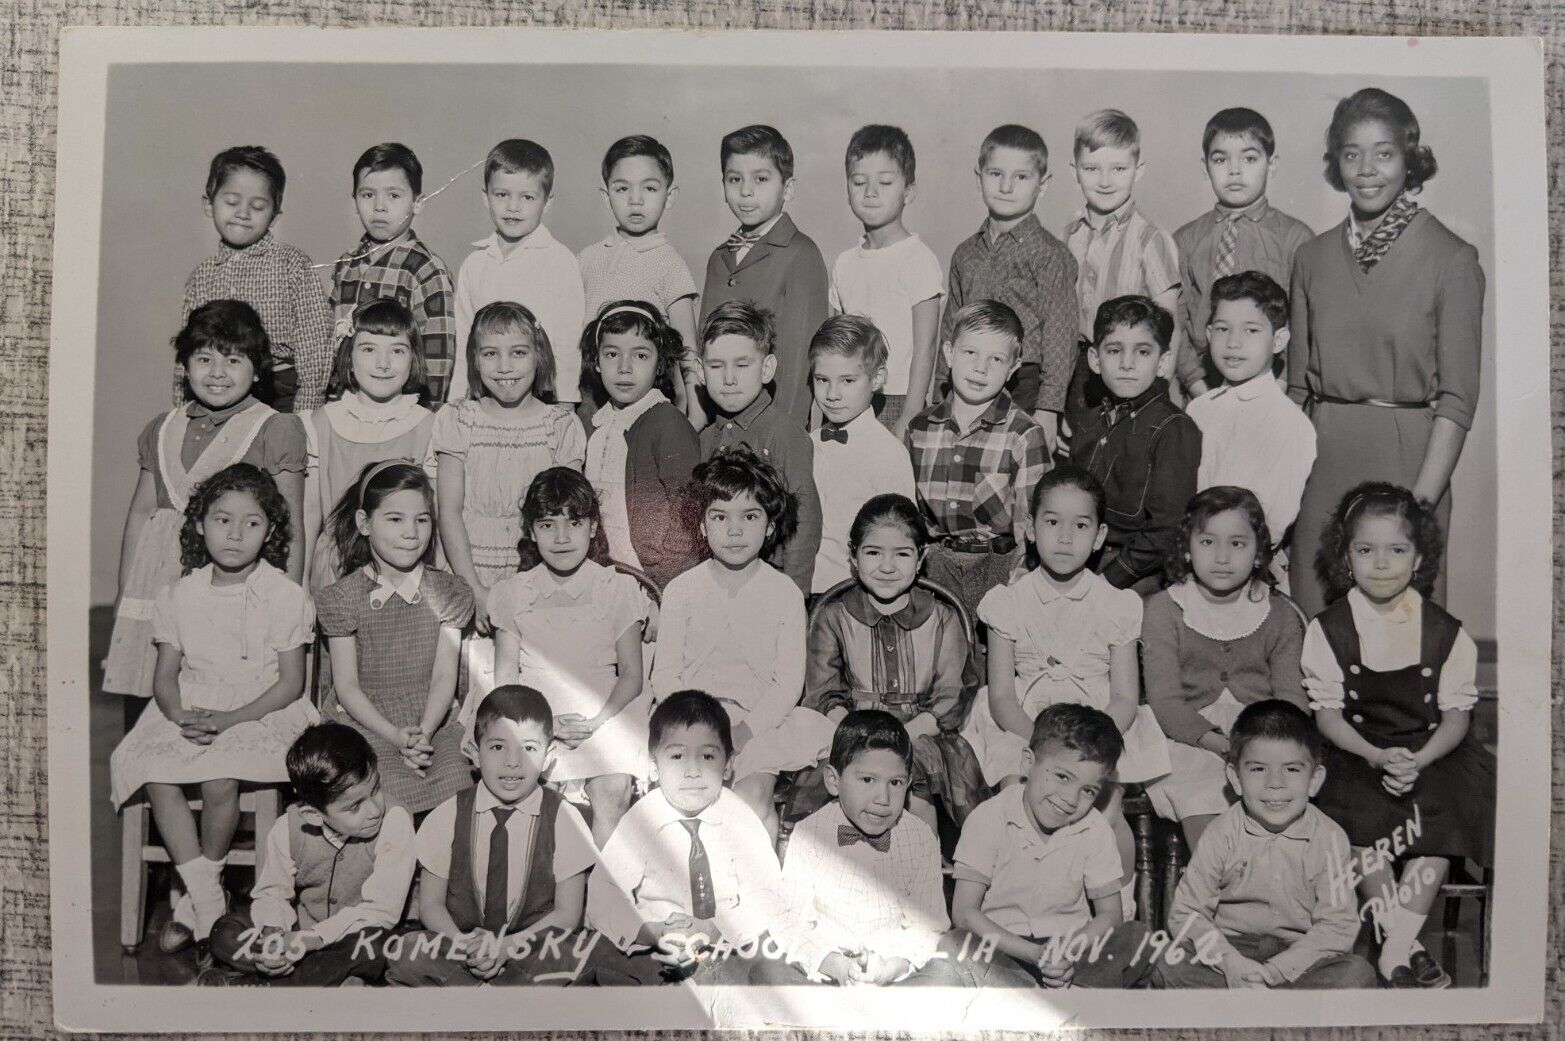 Komensky School 1962 Chicago Class Photo 9x6 Kindergarten 